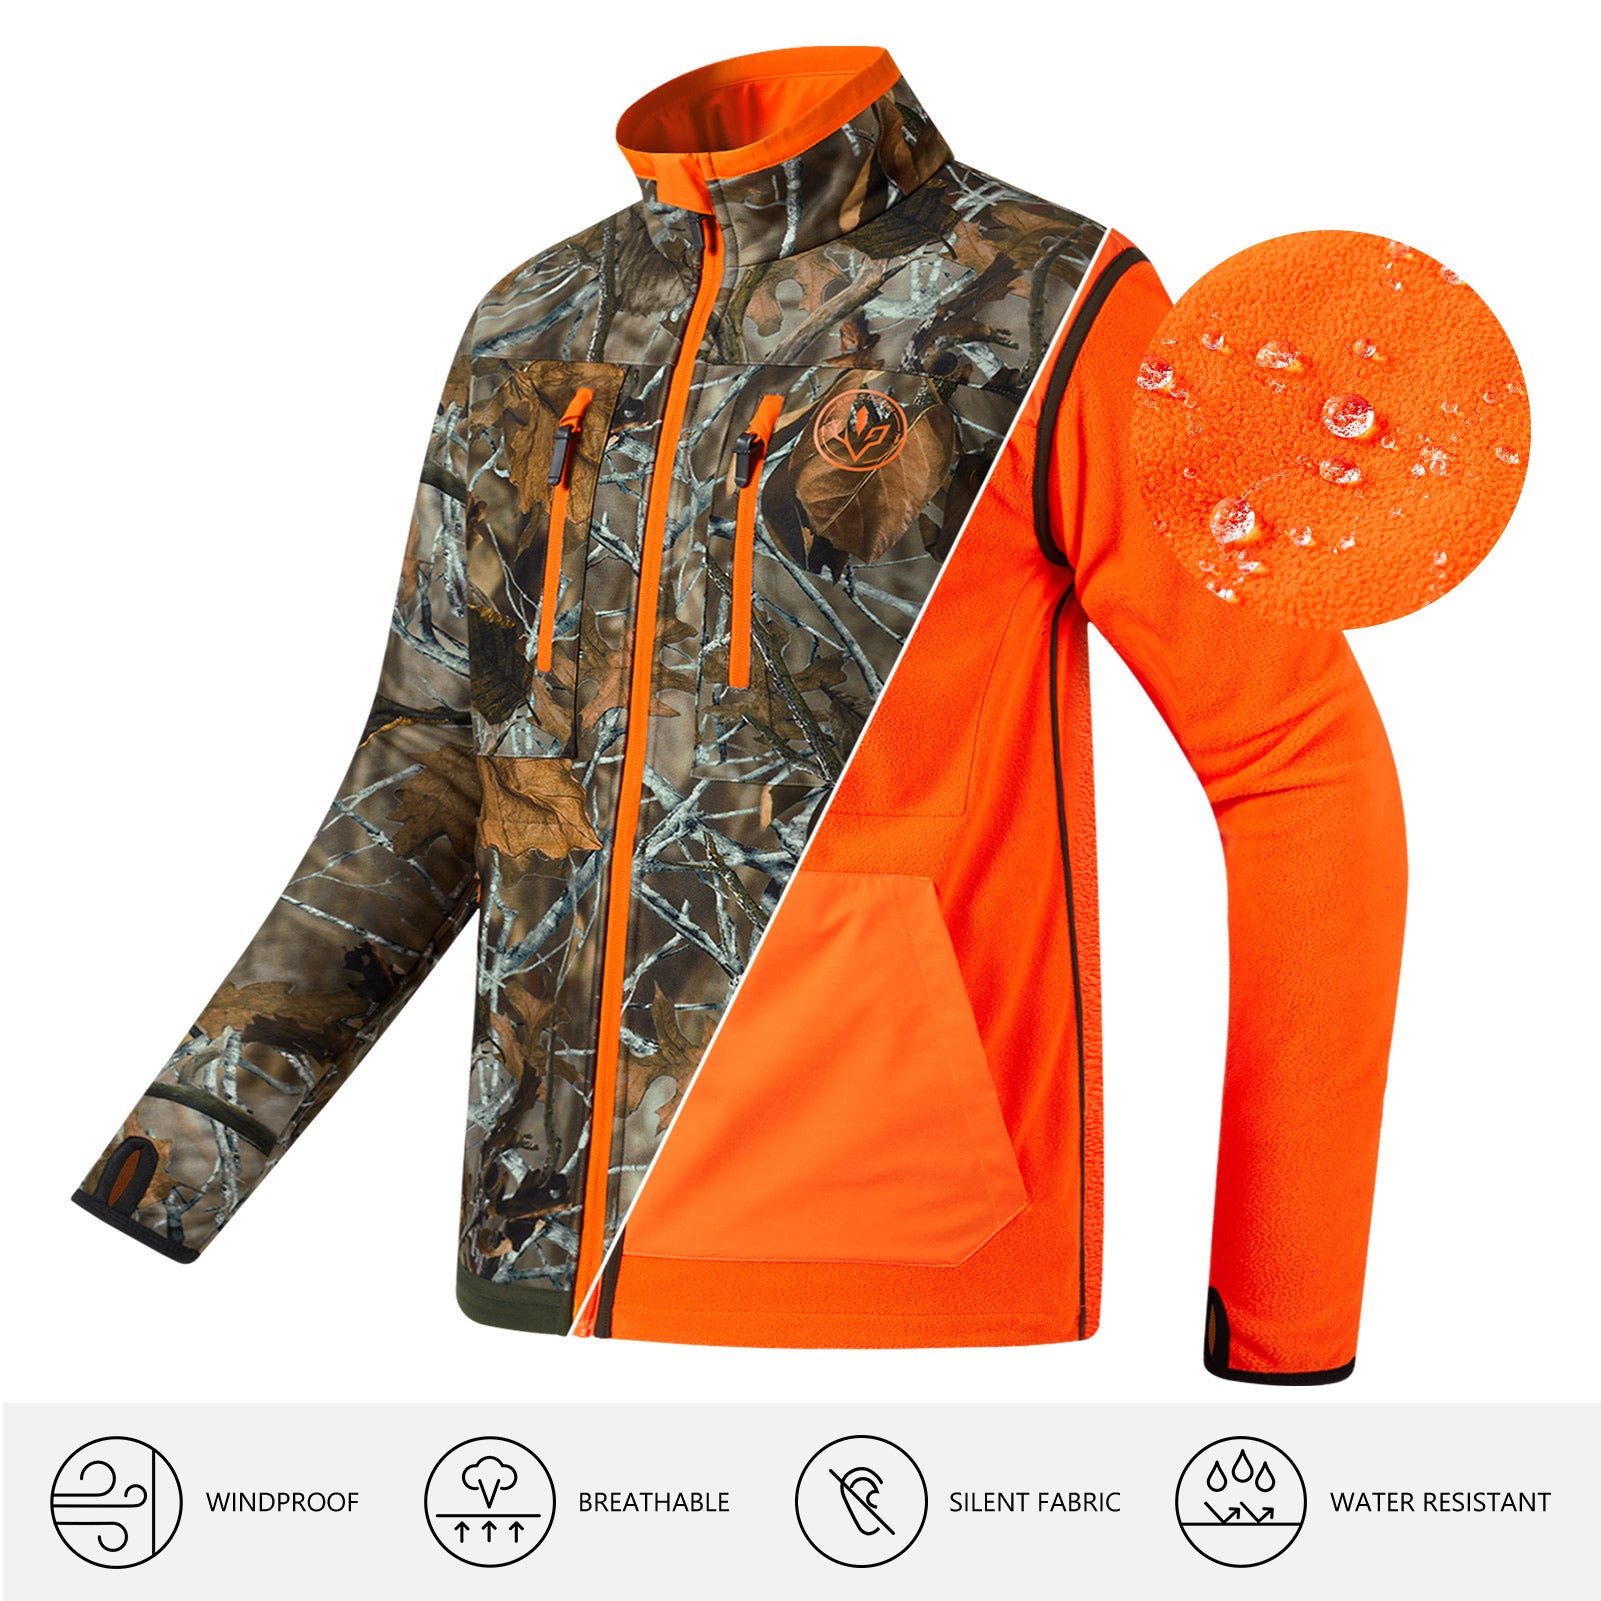 Big & Tall Blaze Orange Hunting Vest 3xlt / Blaze Orange